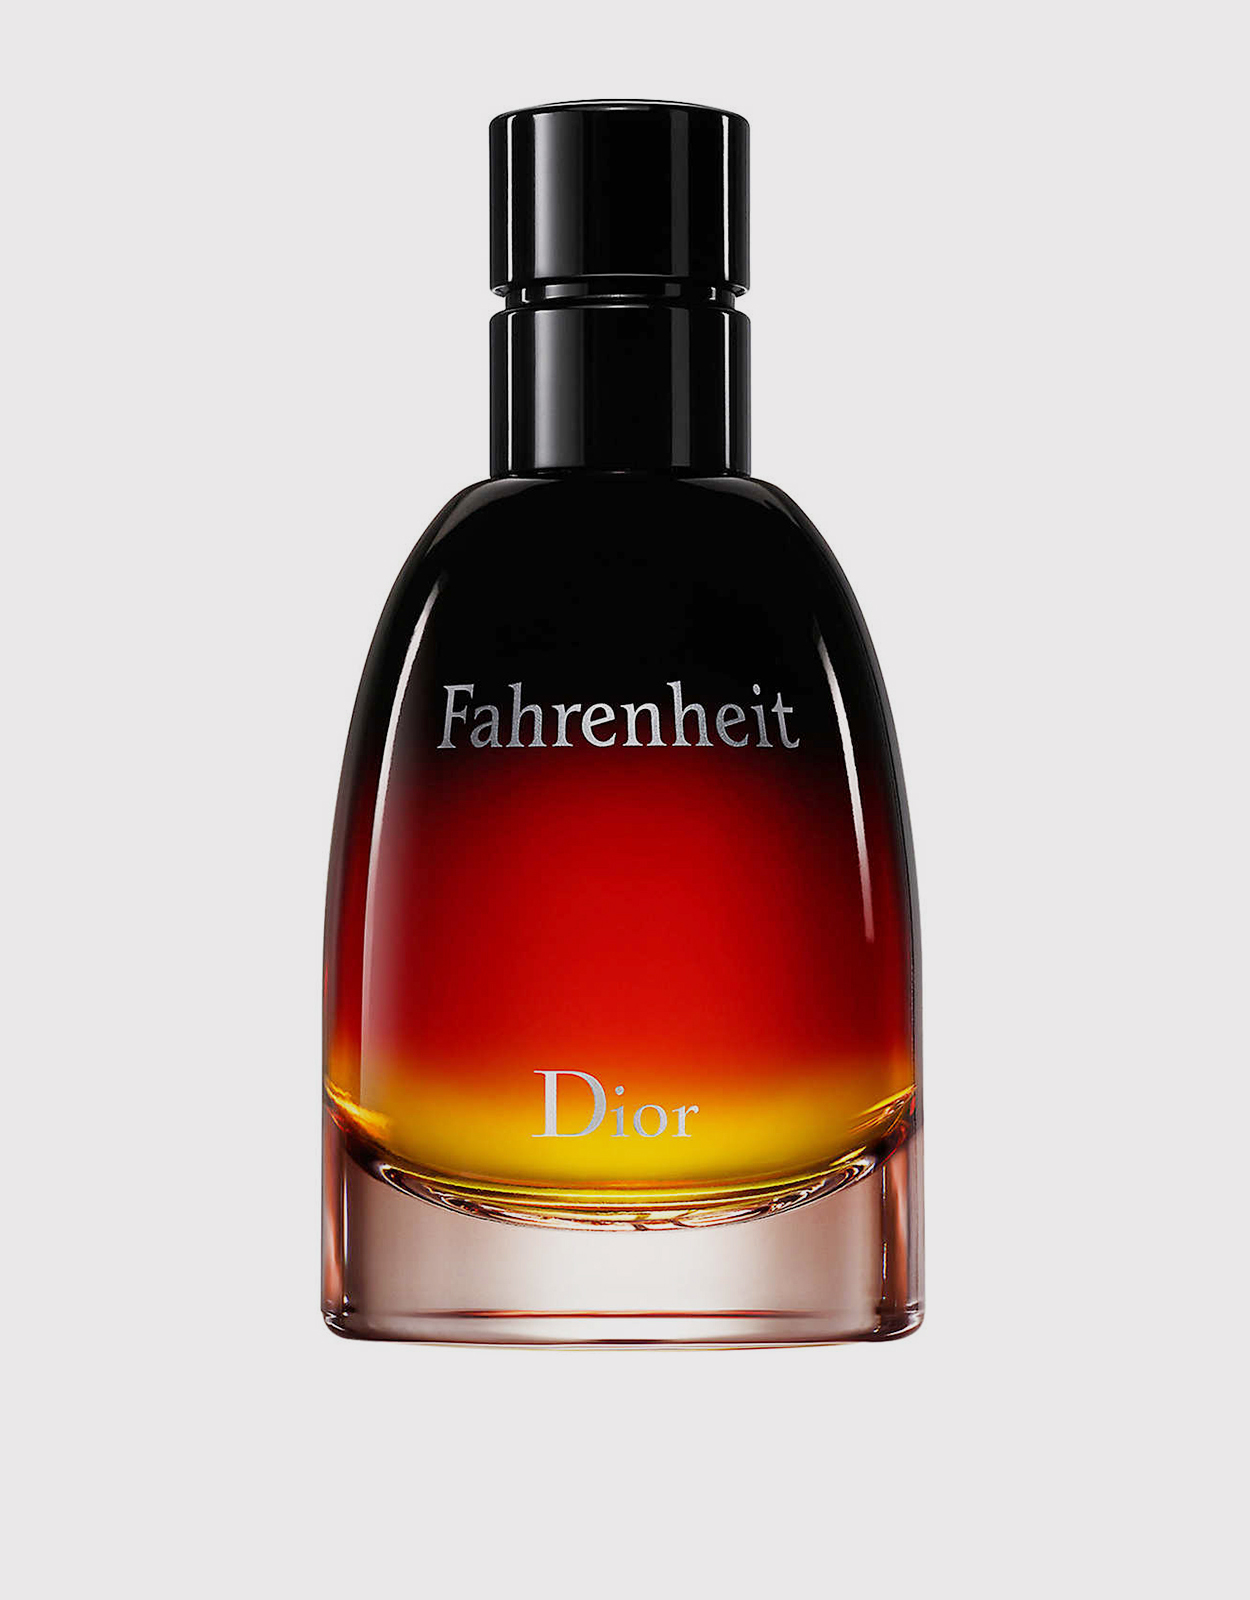 Dior Beauty Fahrenheit Parfum 75ml (フレグランス,メンズフレグランス) IFCHIC.COM